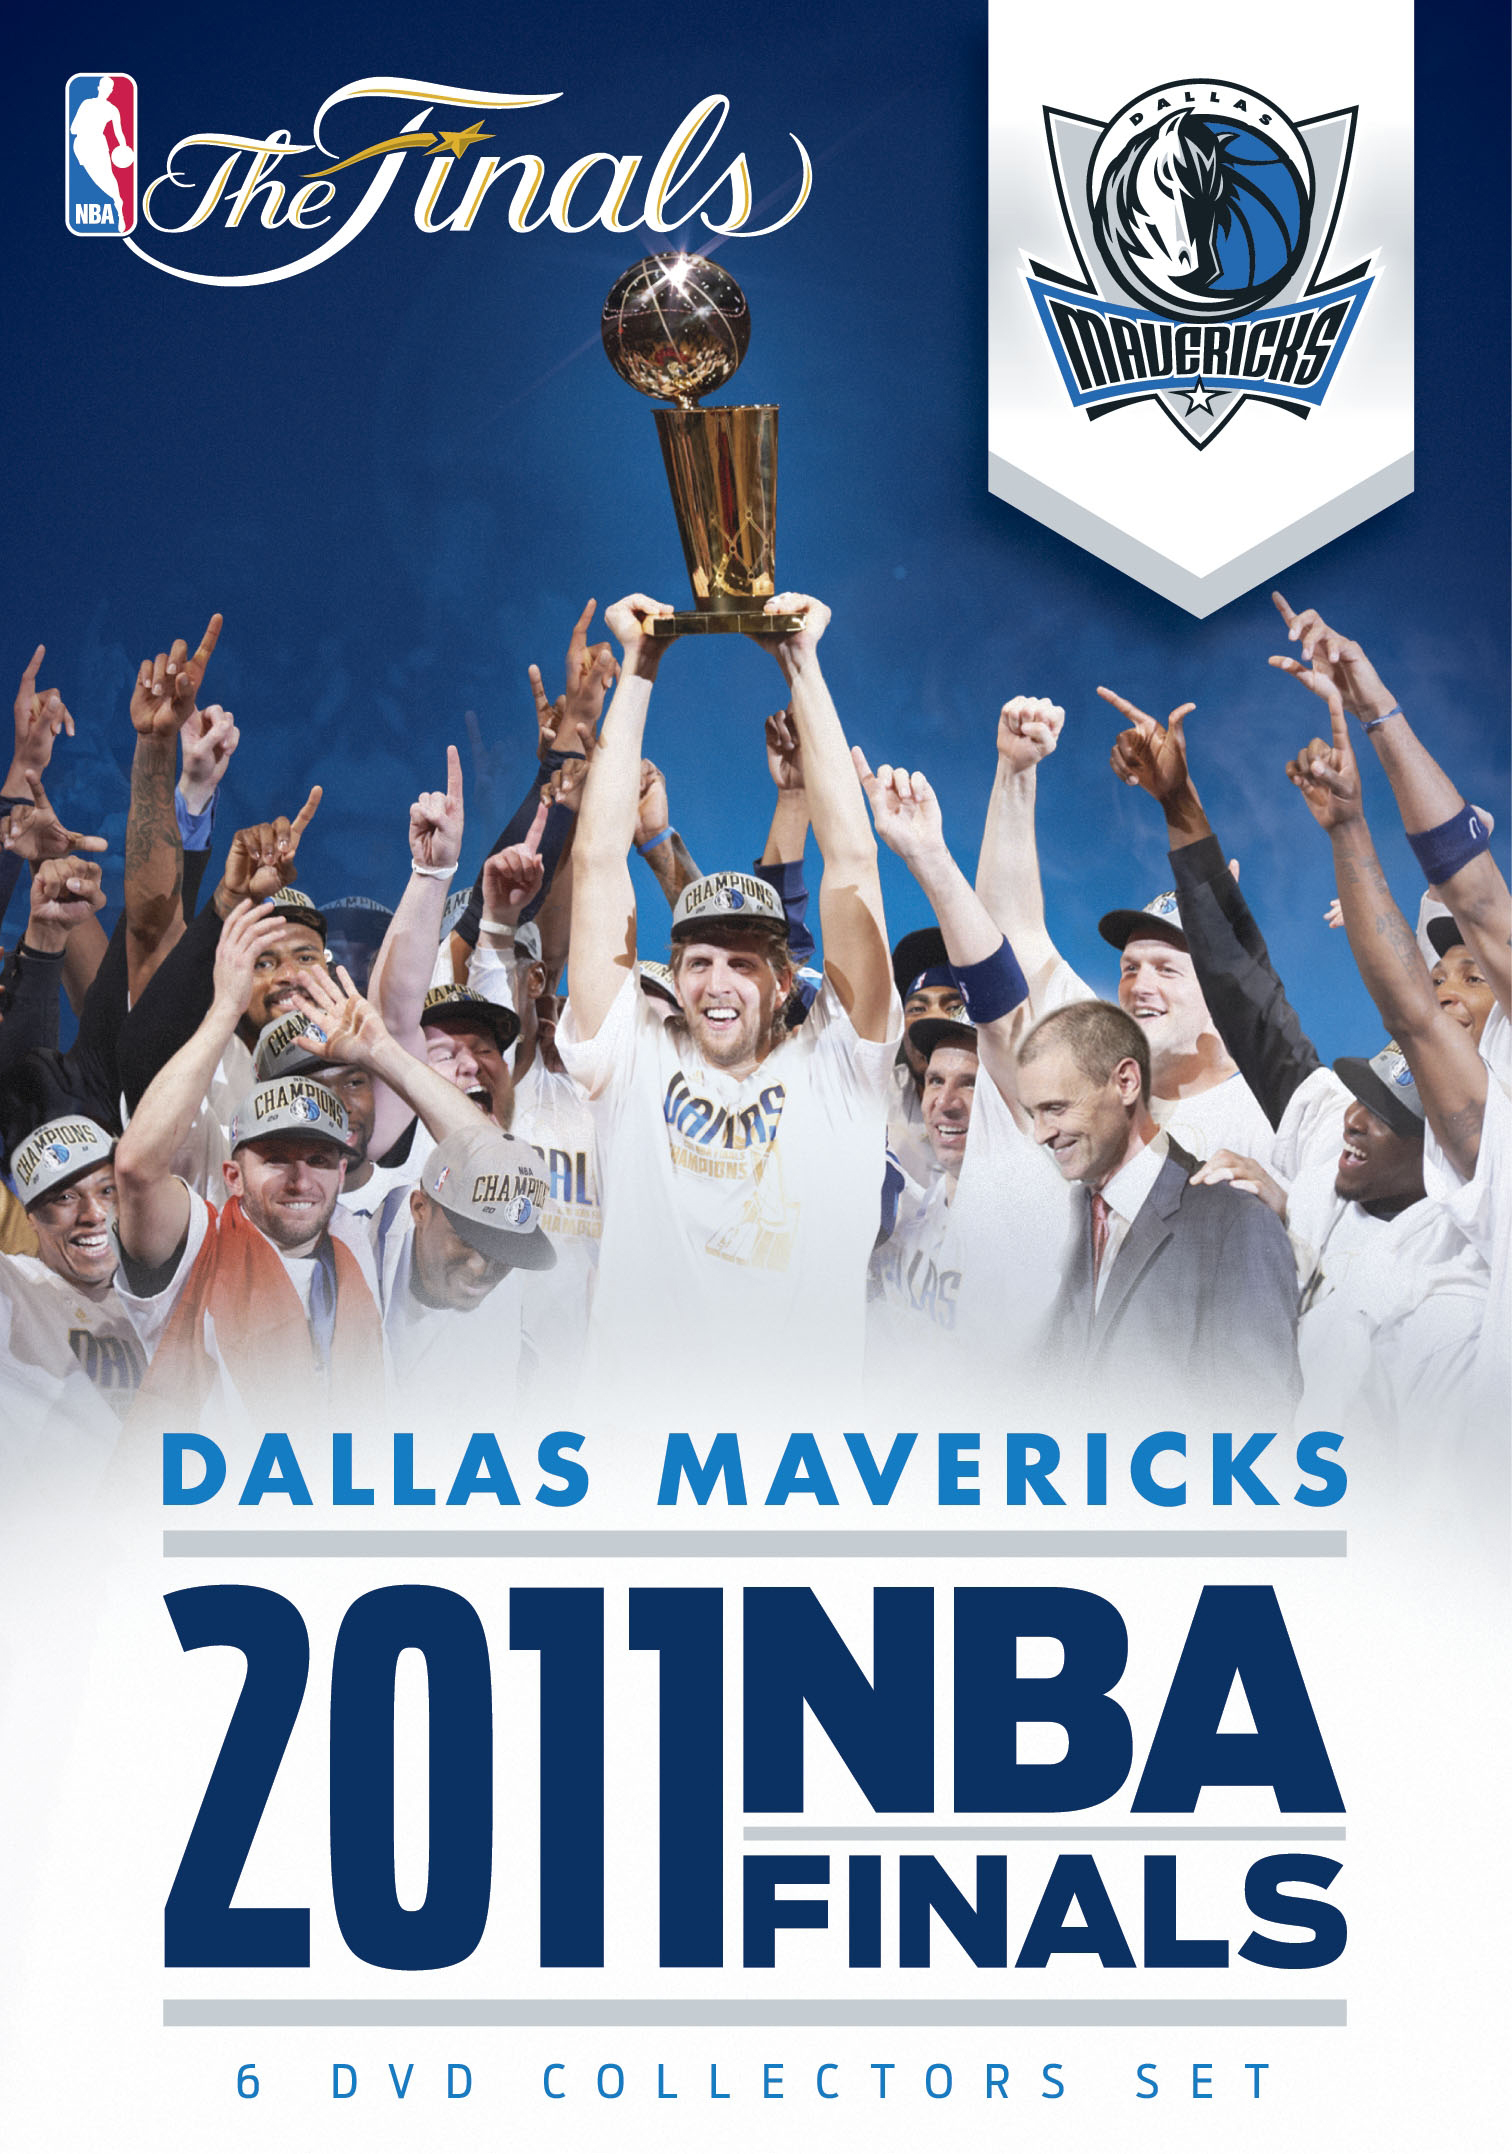 Dallas Mavericks Win 2011 Title - CelticsBlog